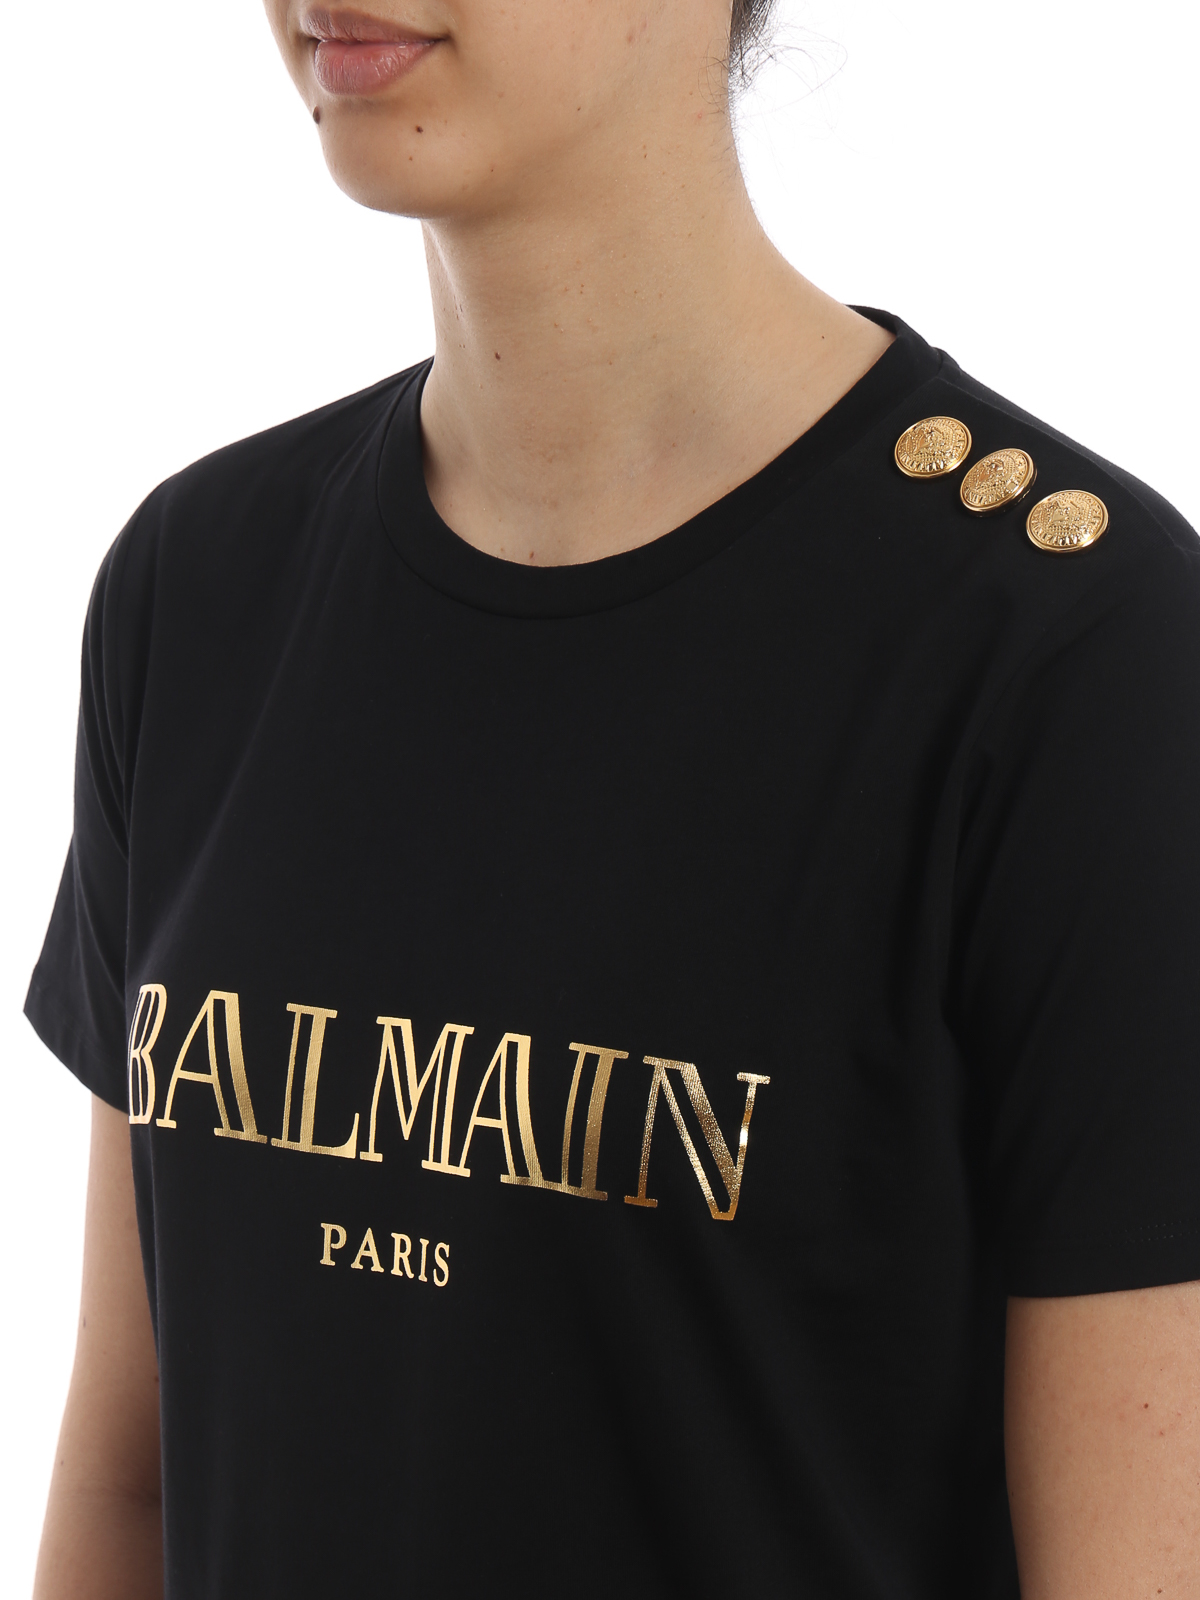 Tシャツ Balmain - Tシャツ - 黒 - RF01322I170EAD | iKRIX shop online